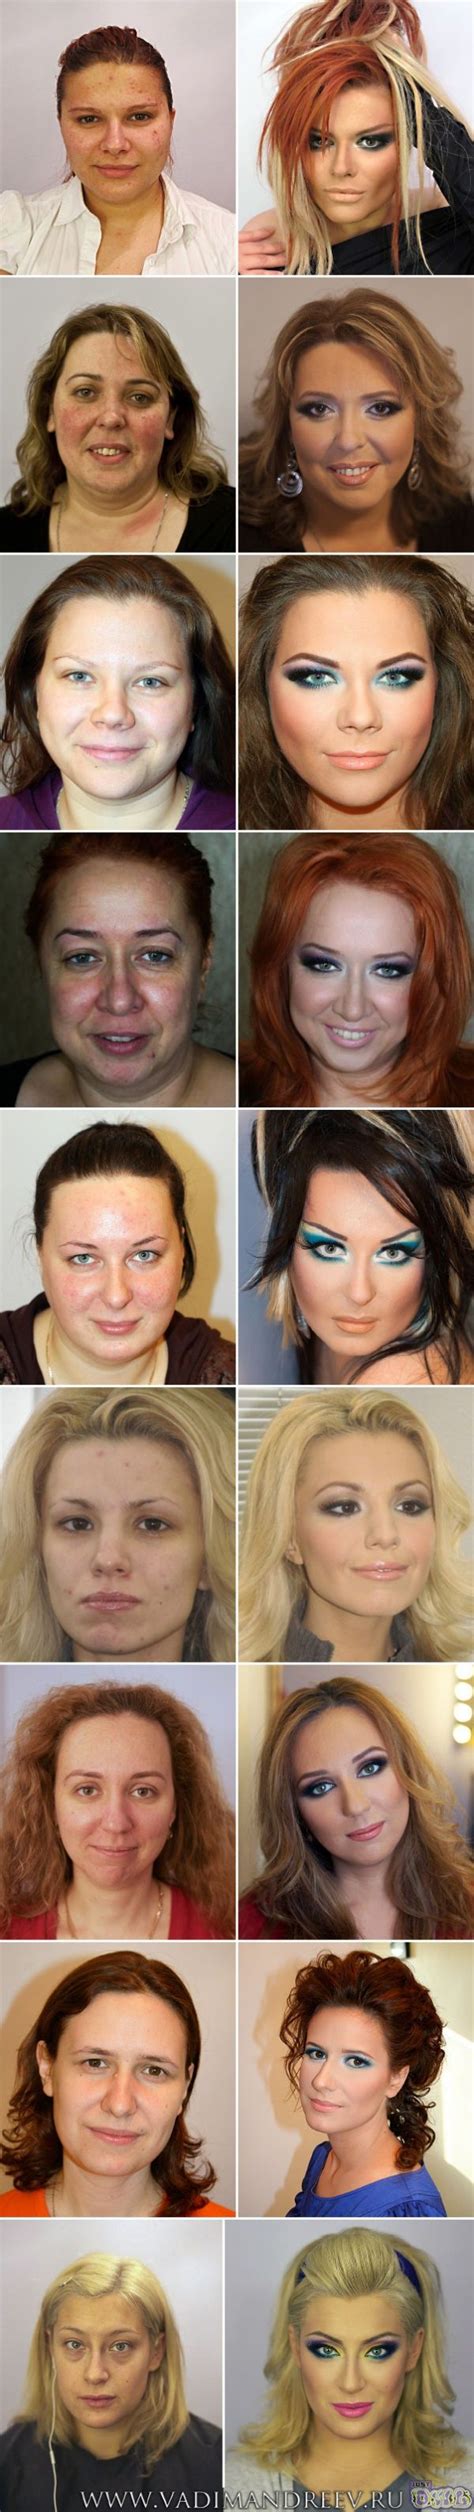 incredible    makeup pictures woah    makeup artist lol power